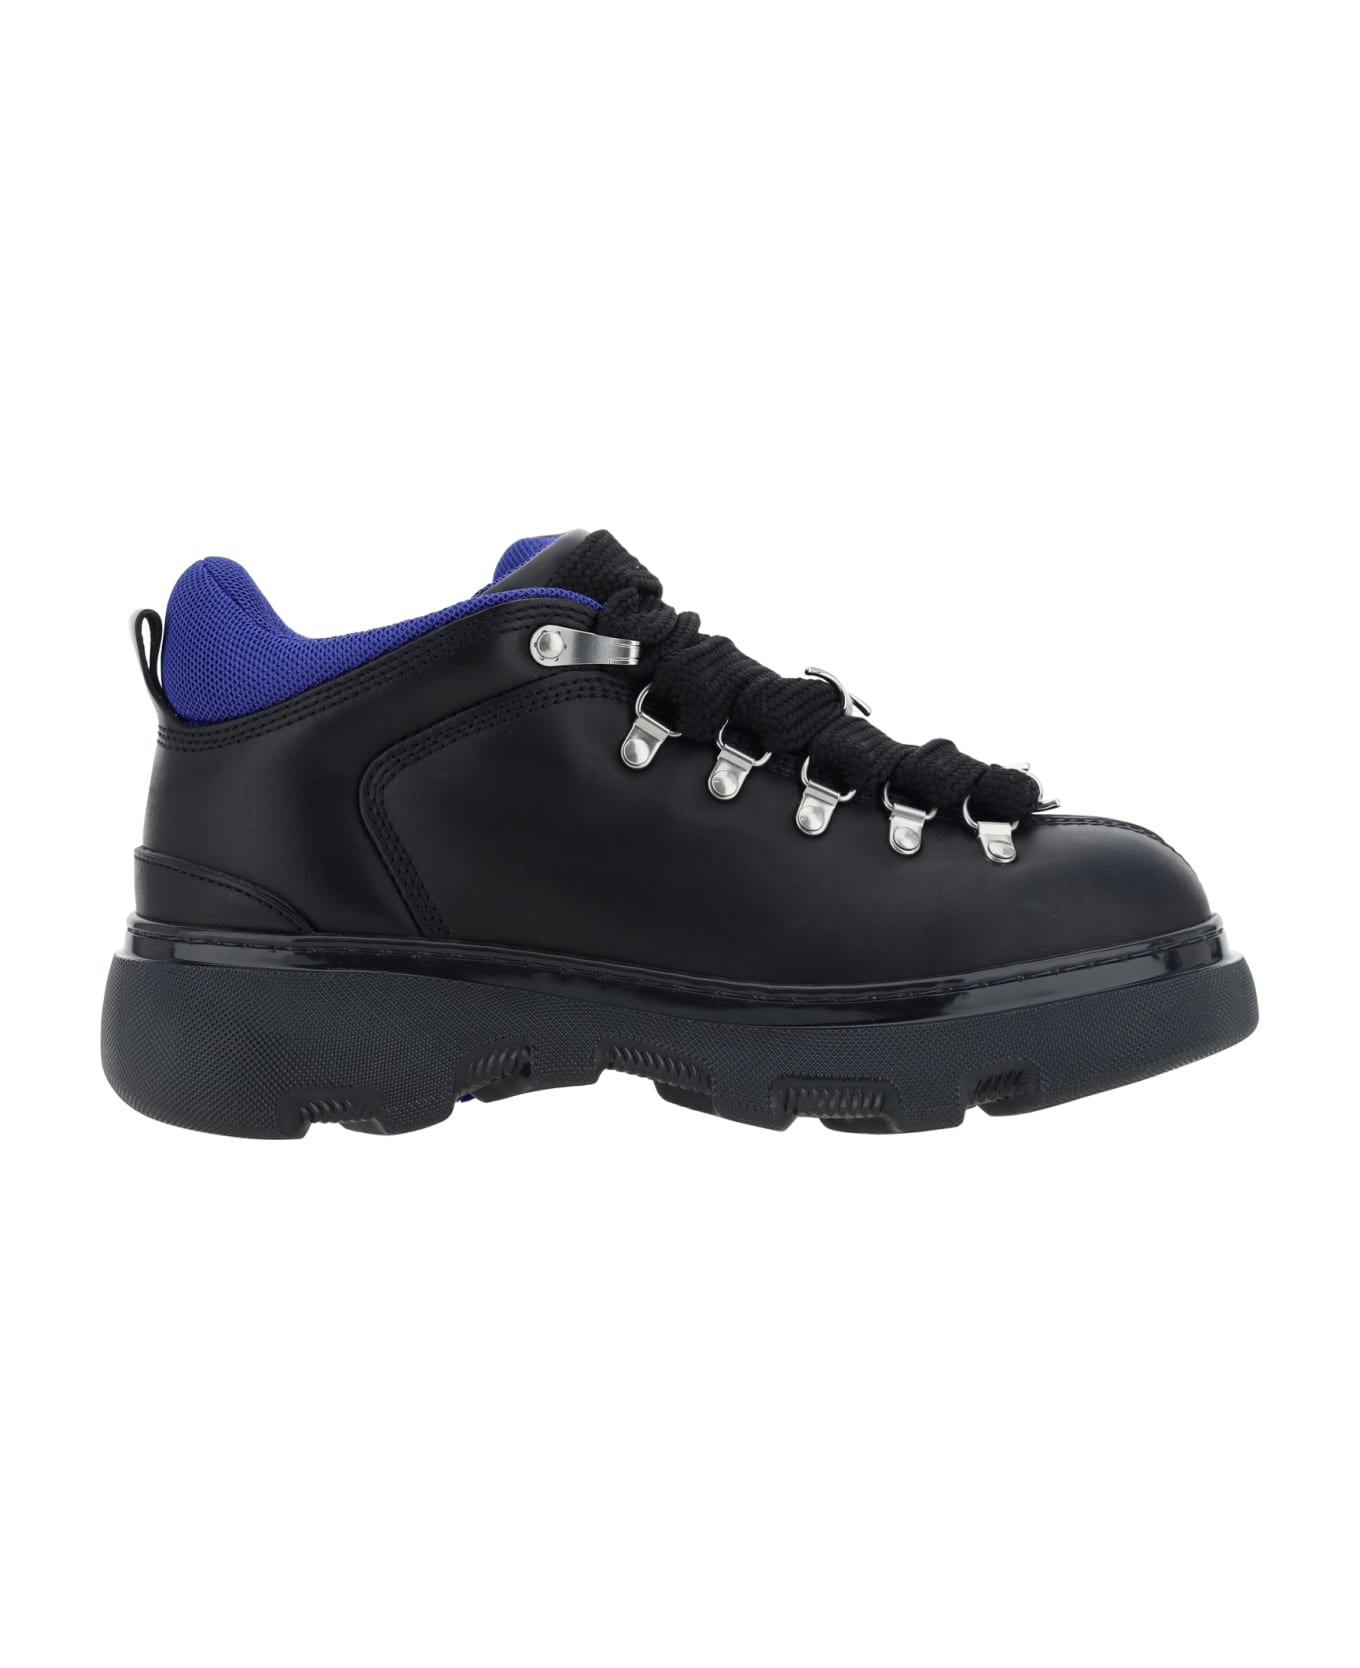 Burberry Trek Ankle Boots - Black